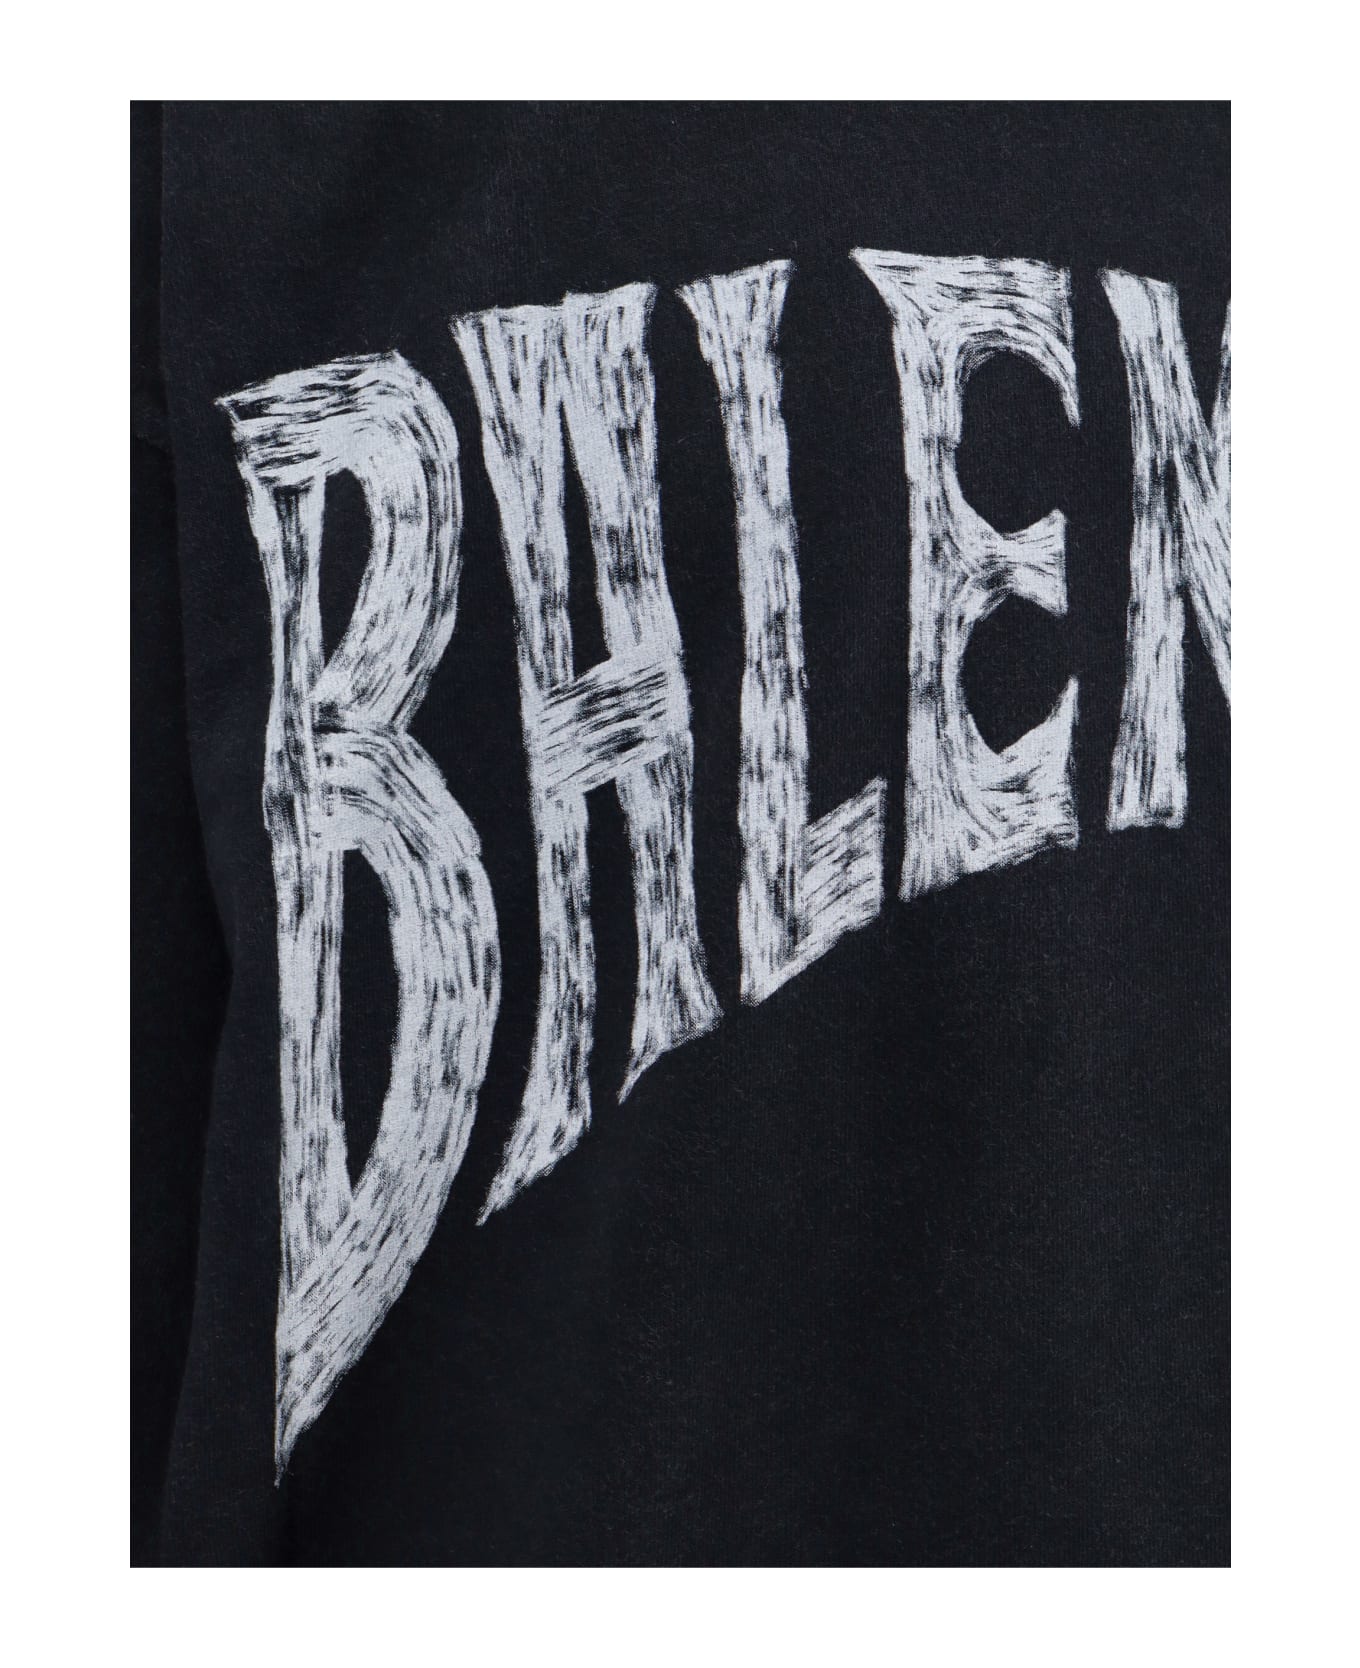 Balenciaga Hand-drawn T-shirt - Black シャツ